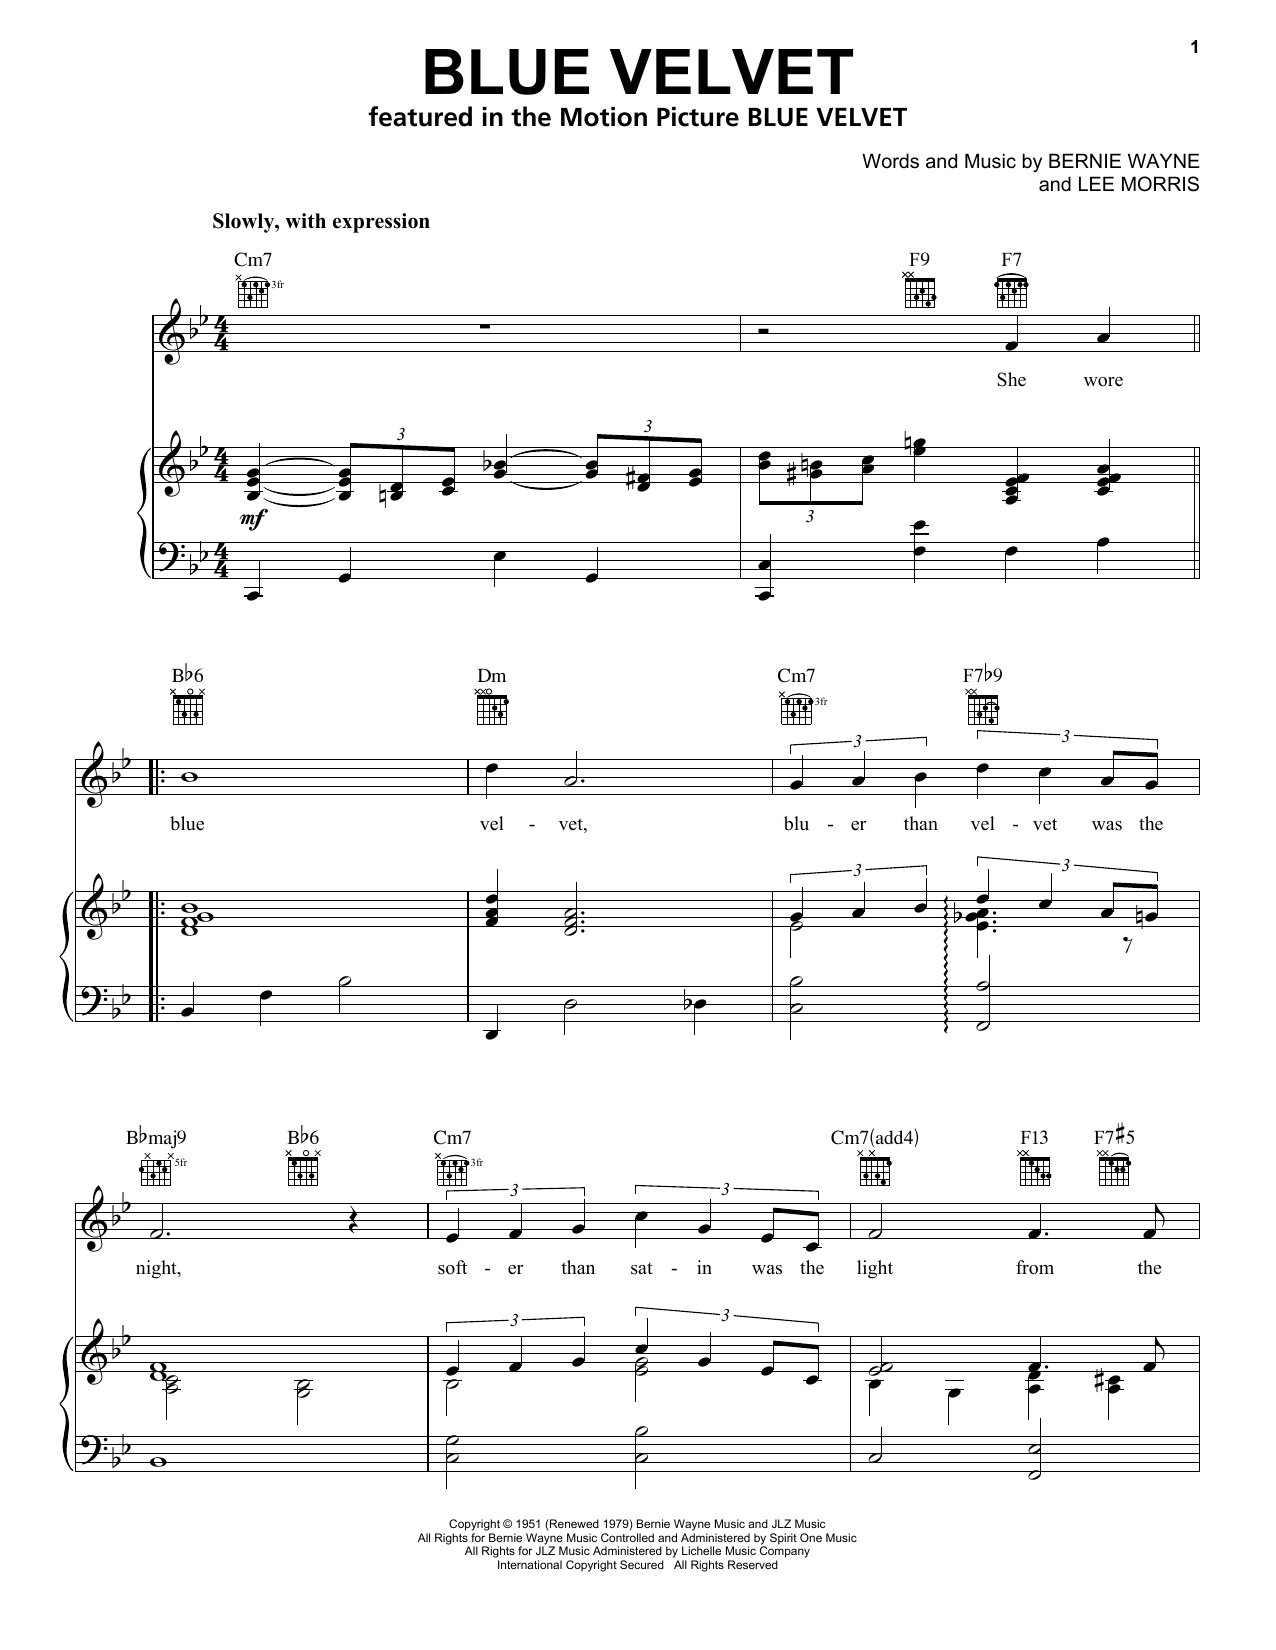 Bobby Vinton Blue Velvet Sheet Music Notes & Chords for Trumpet - Download or Print PDF